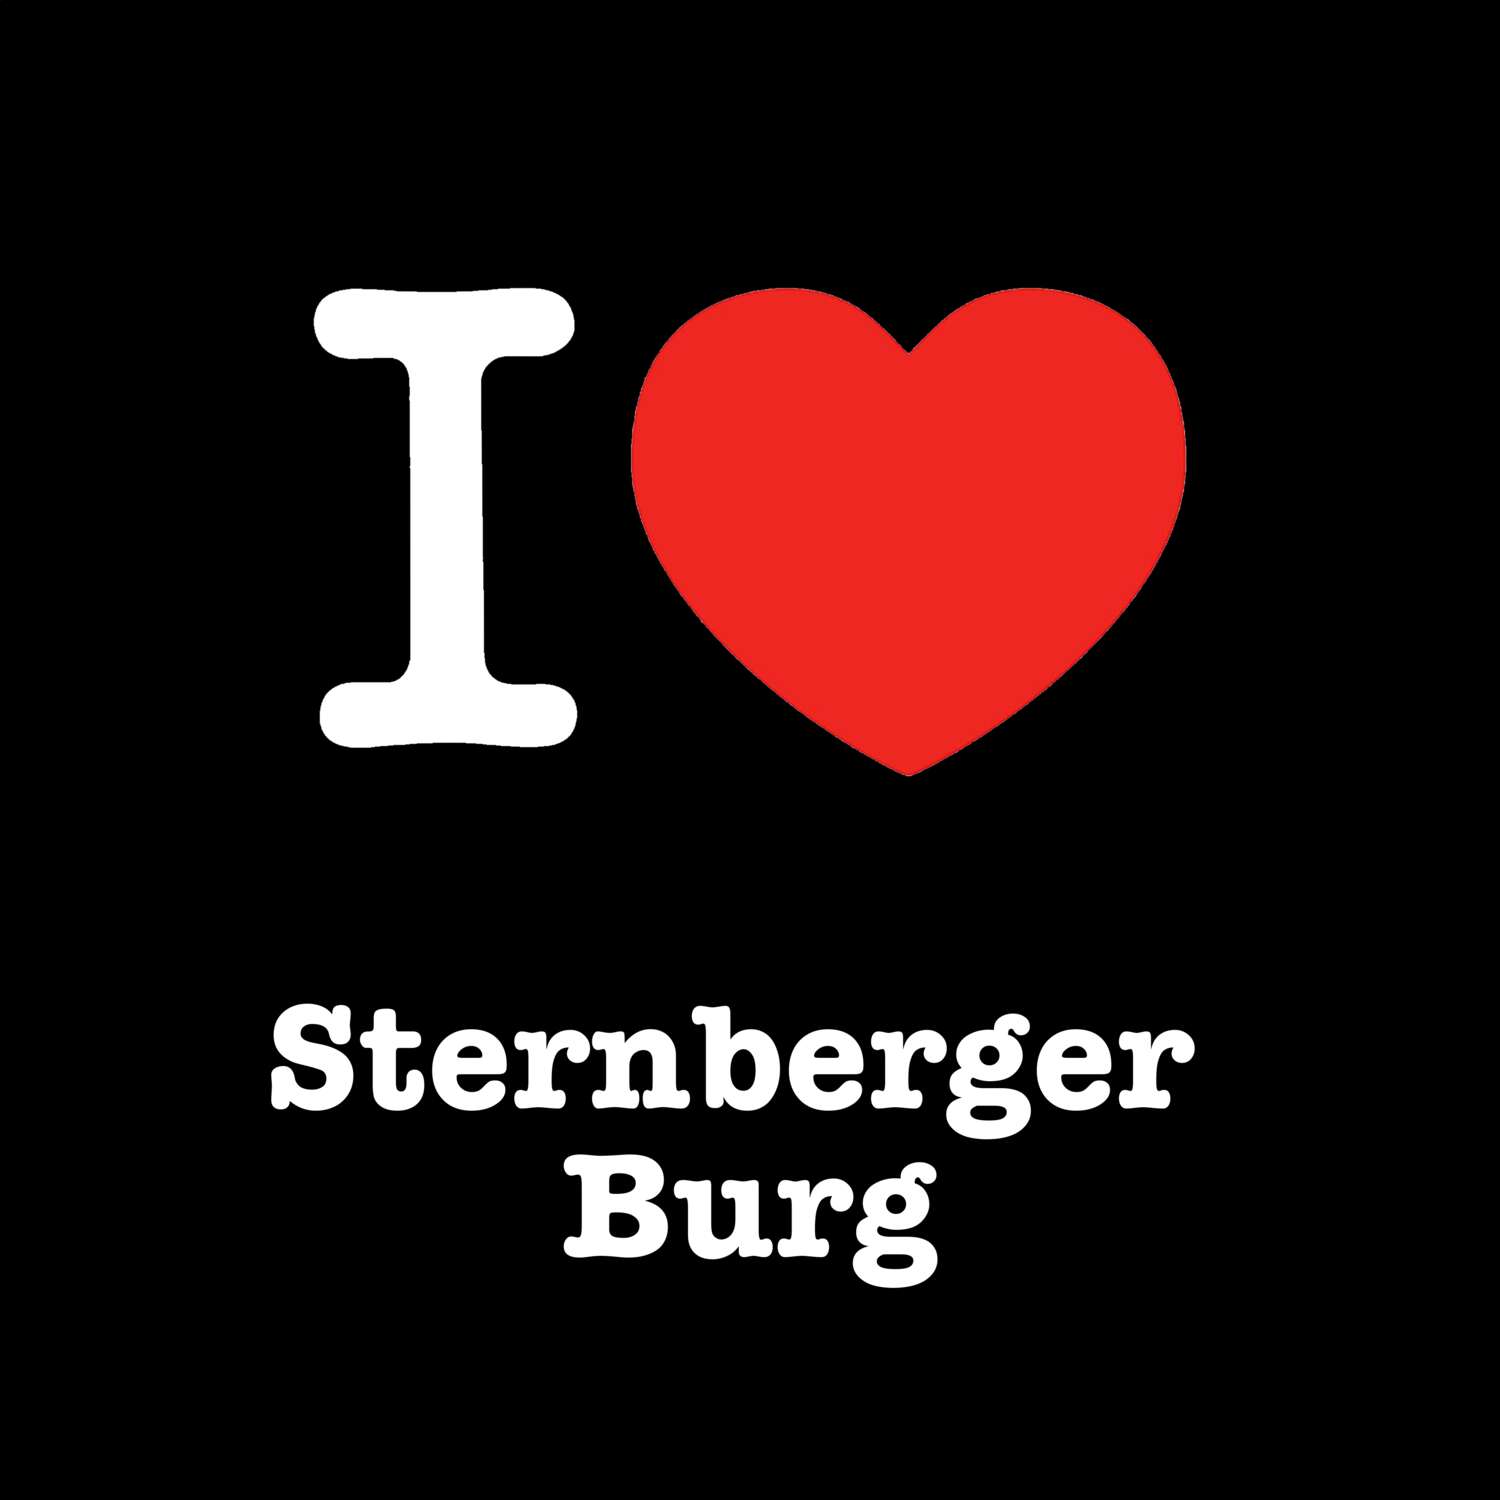 Sternberger Burg T-Shirt »I love«